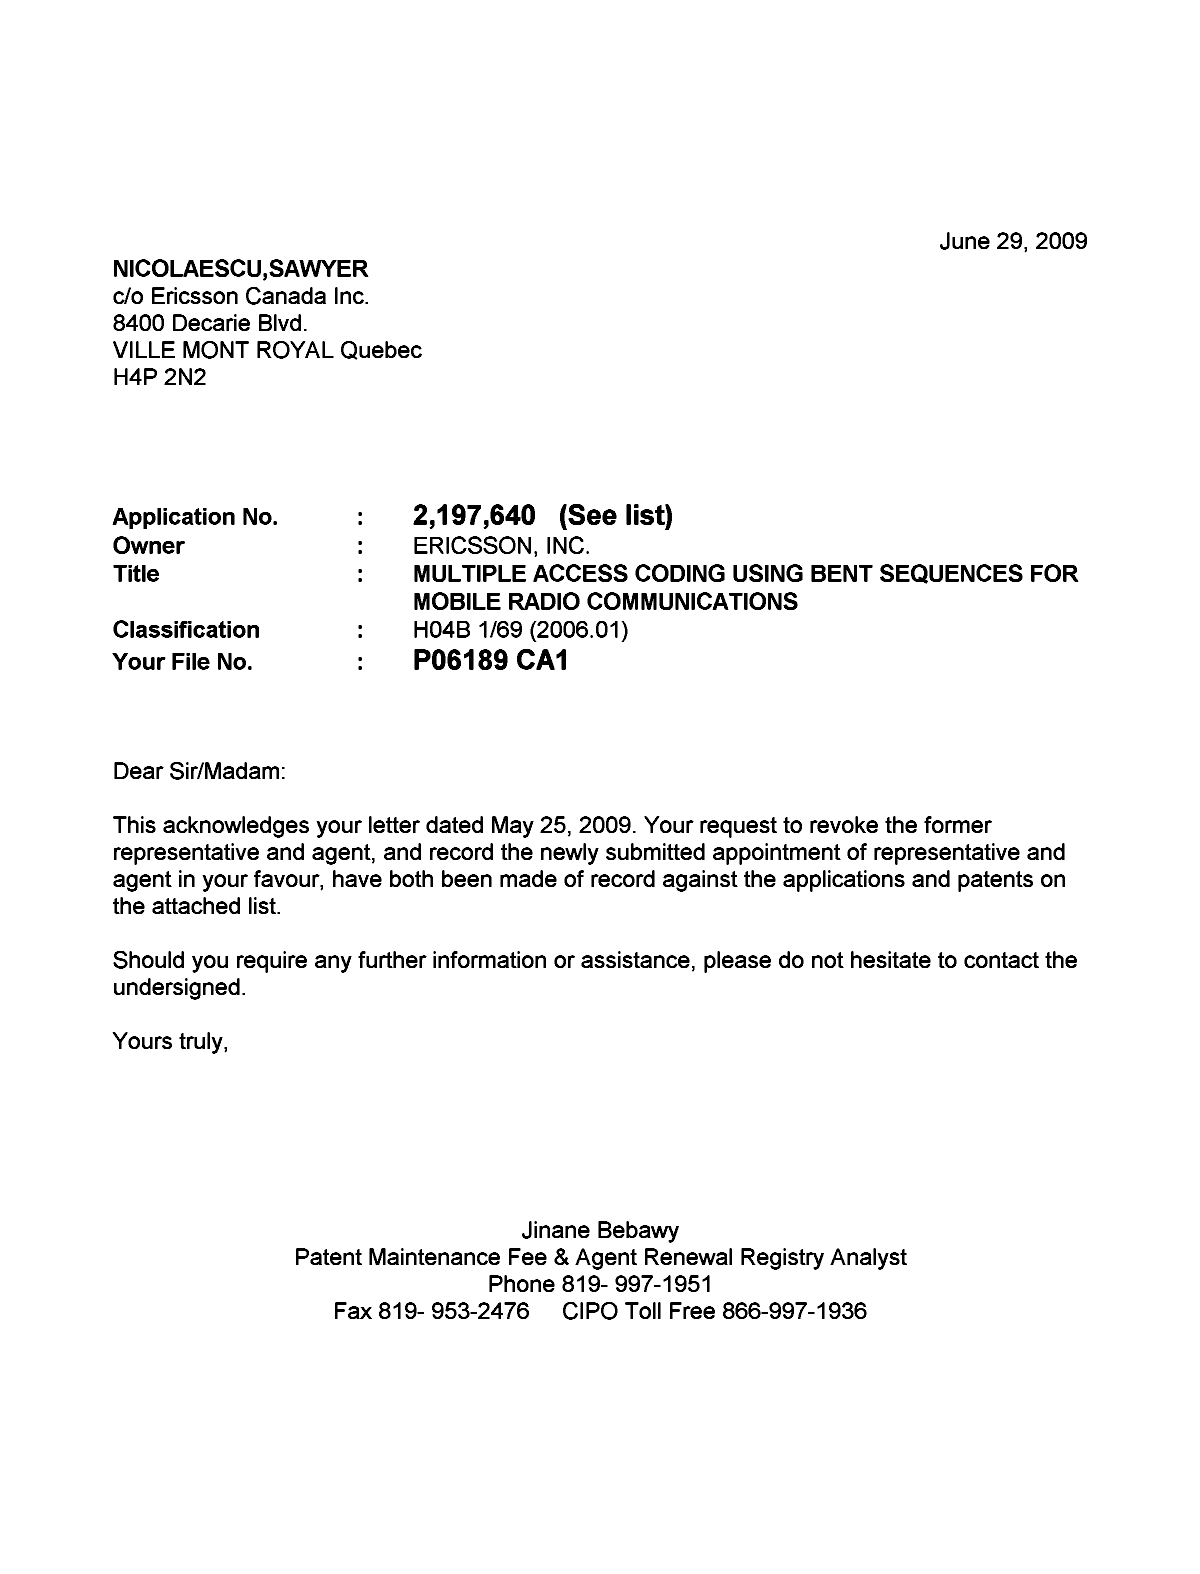 Canadian Patent Document 2363466. Correspondence 20090629. Image 1 of 1